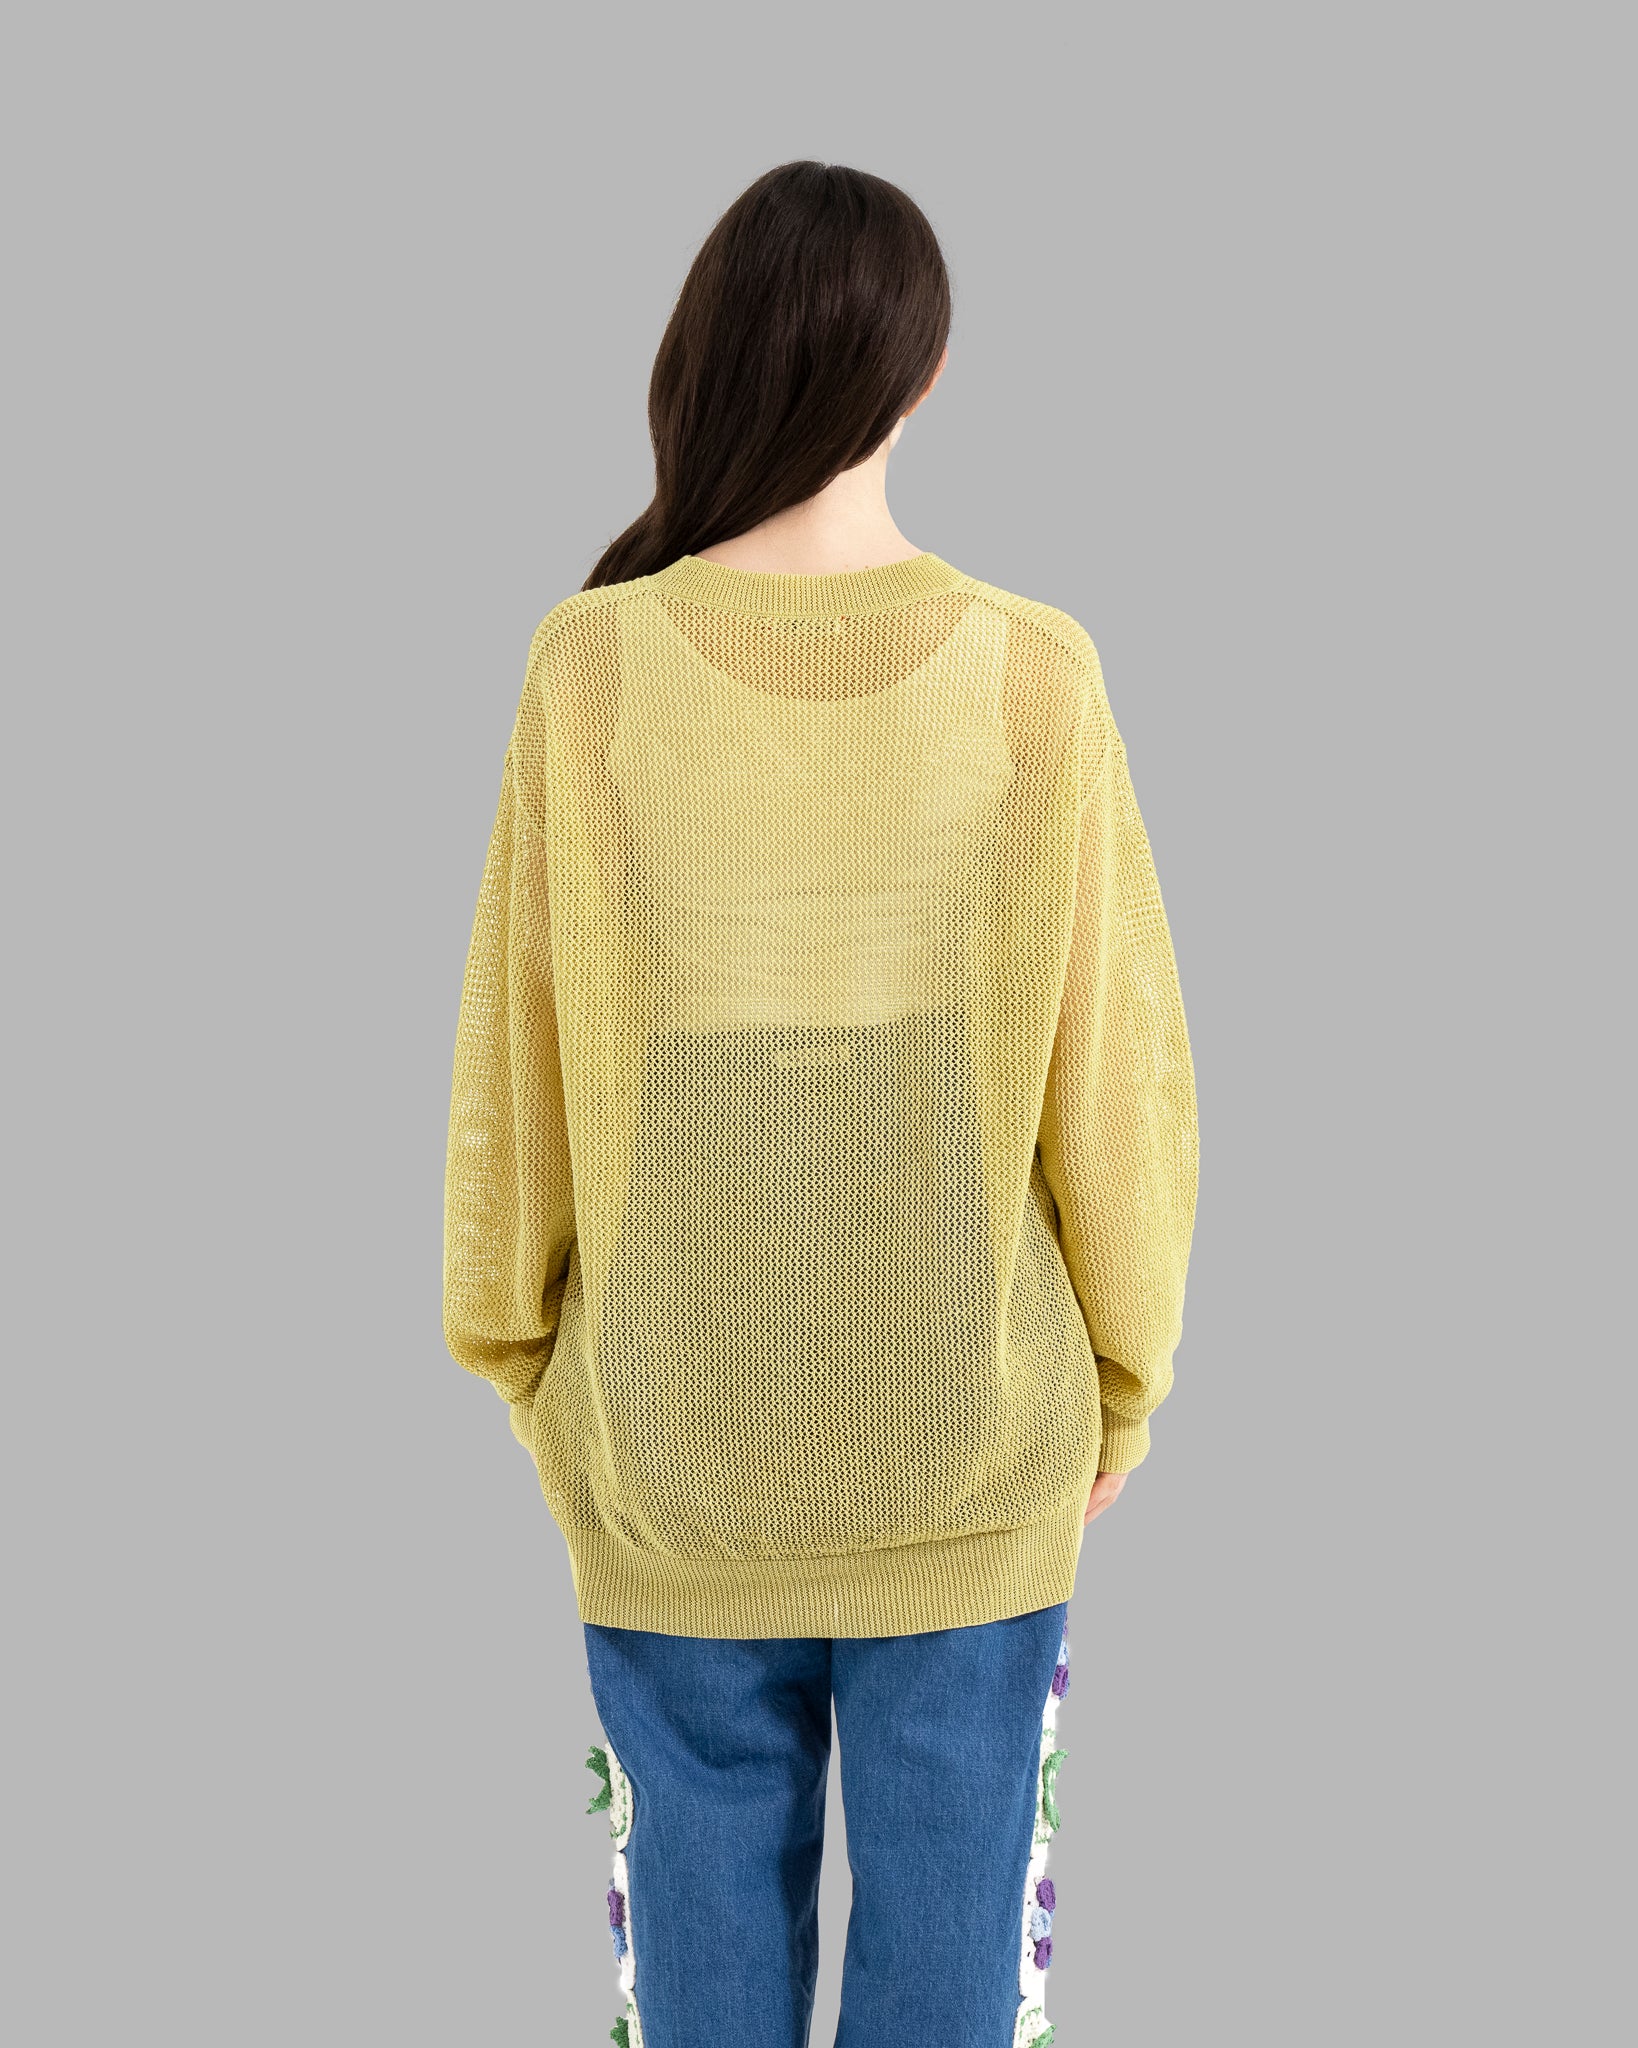 Gima Cotton Mesh Knit 풀오버 스웨터 -Smoke Yellow